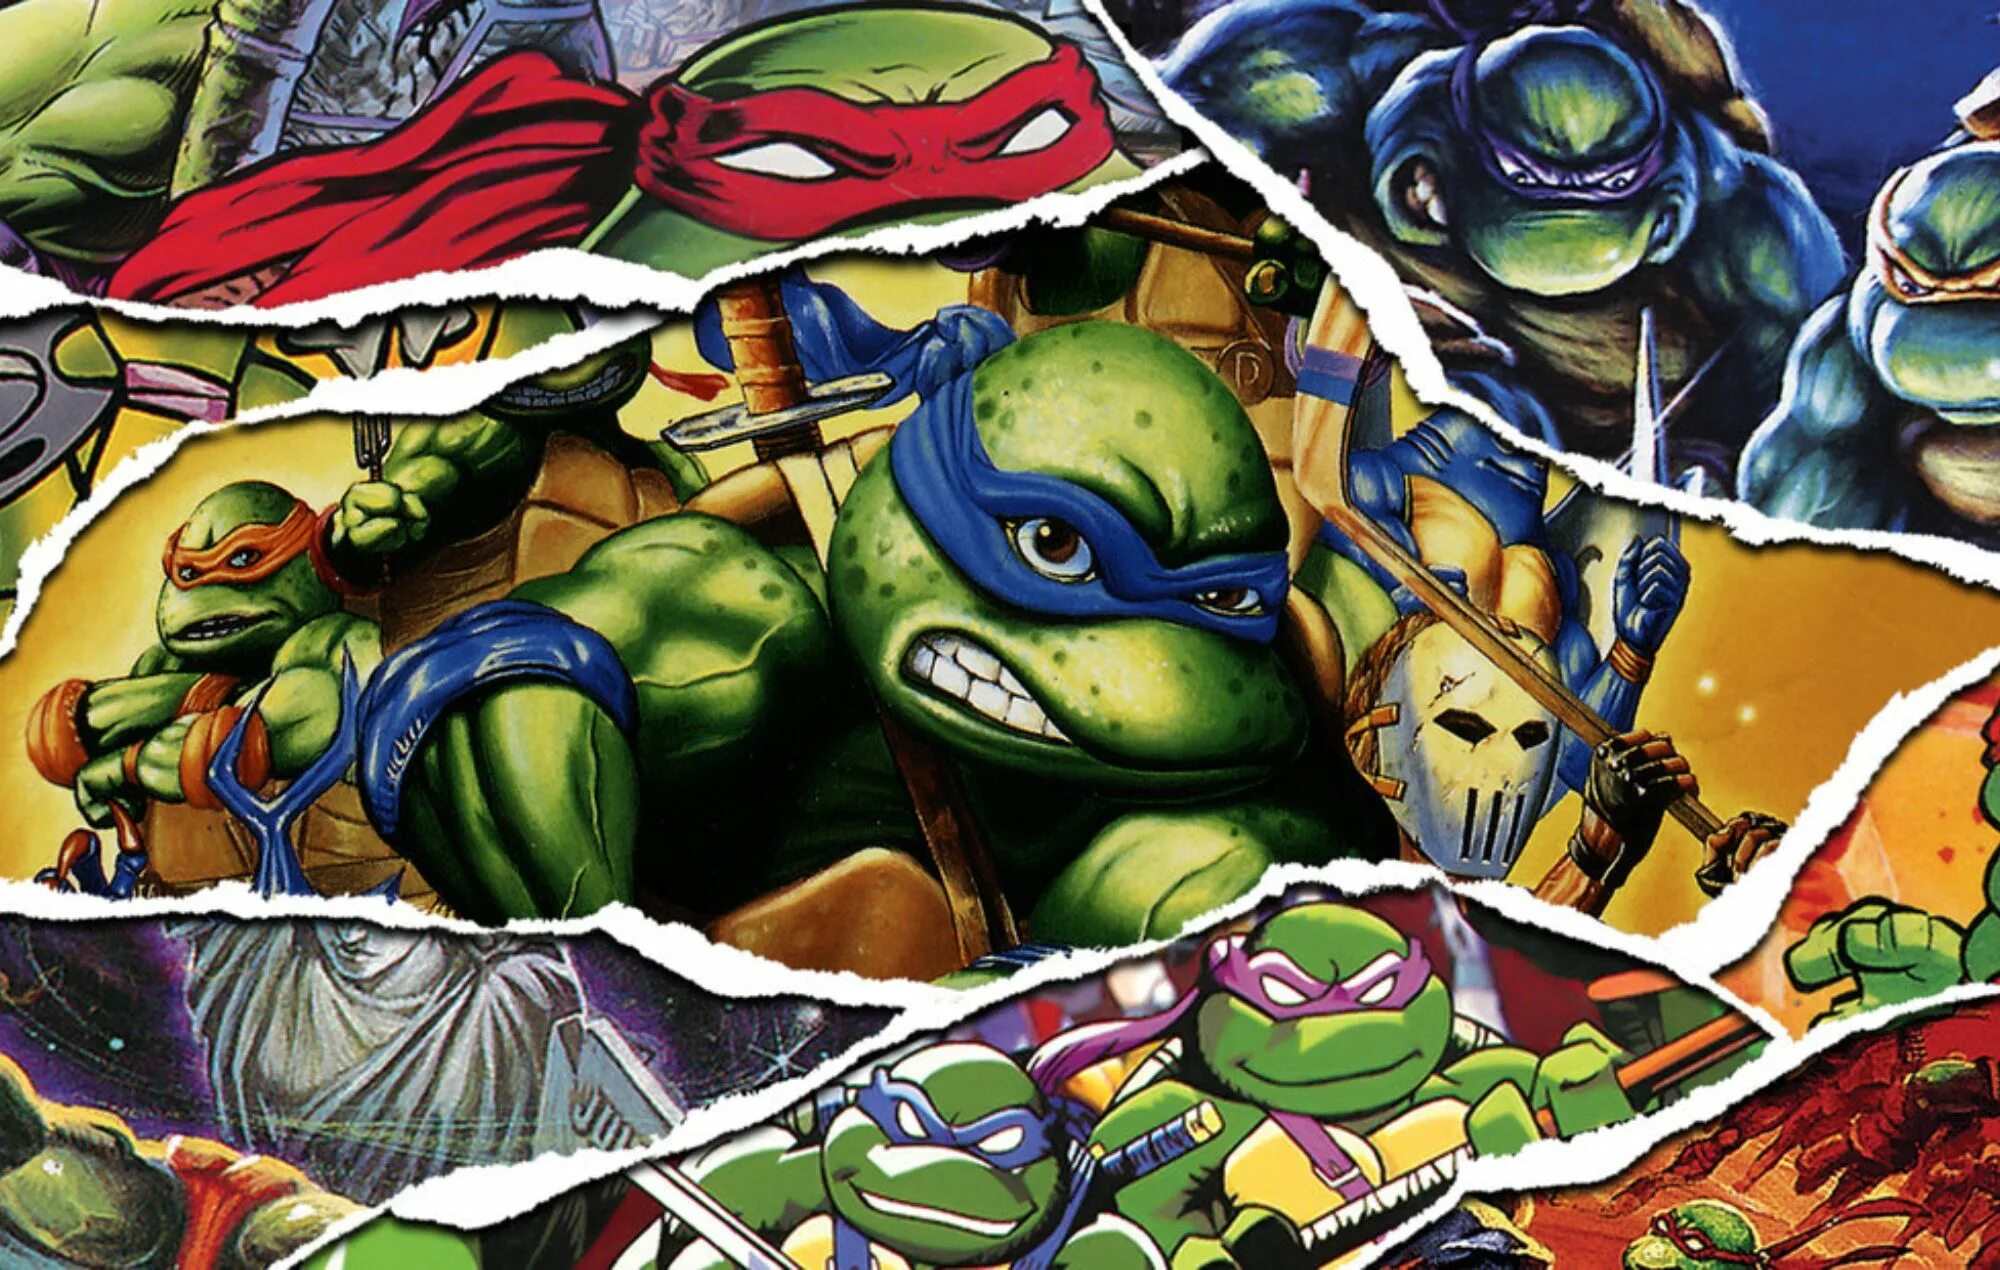 Mutant ninja turtles cowabunga collection. TMNT Cowabunga collection. Teenage Mutant Ninja Turtles: the Cowabunga. Игра teenage Mutant Ninja Turtles: the Cowabunga collection. Ninja Turtles Cowabunga collection.